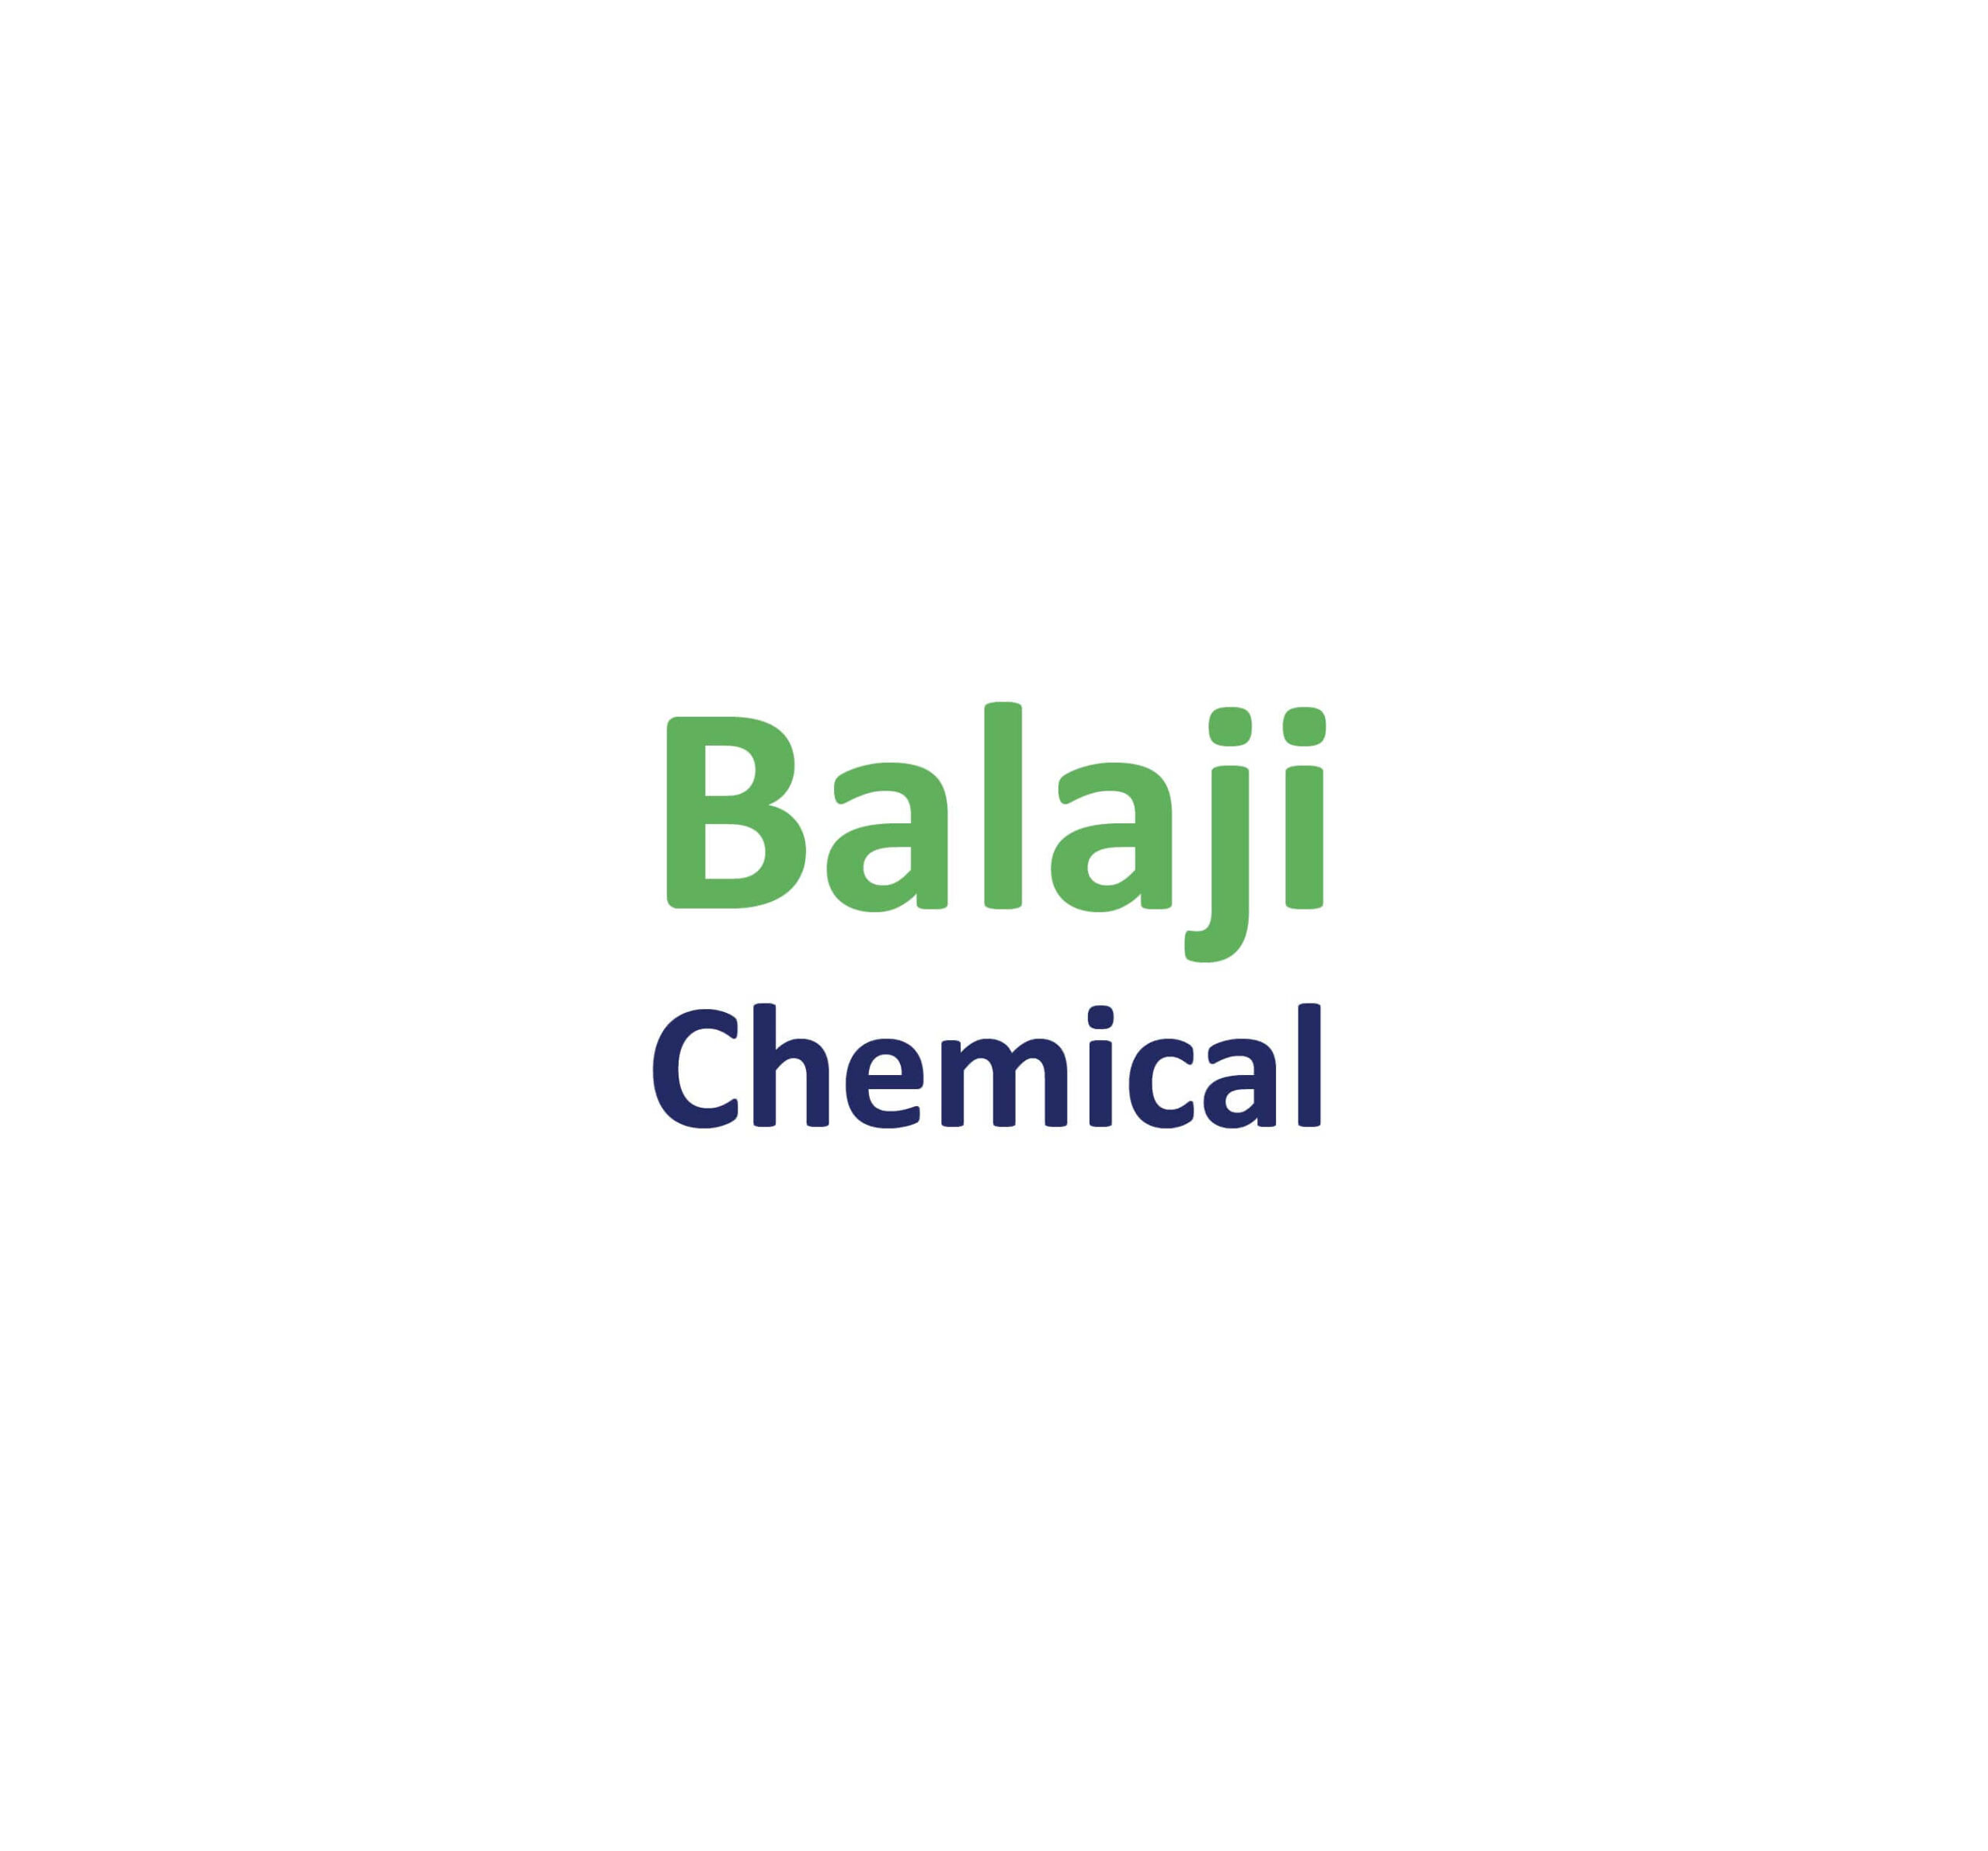 Balaji Chemical